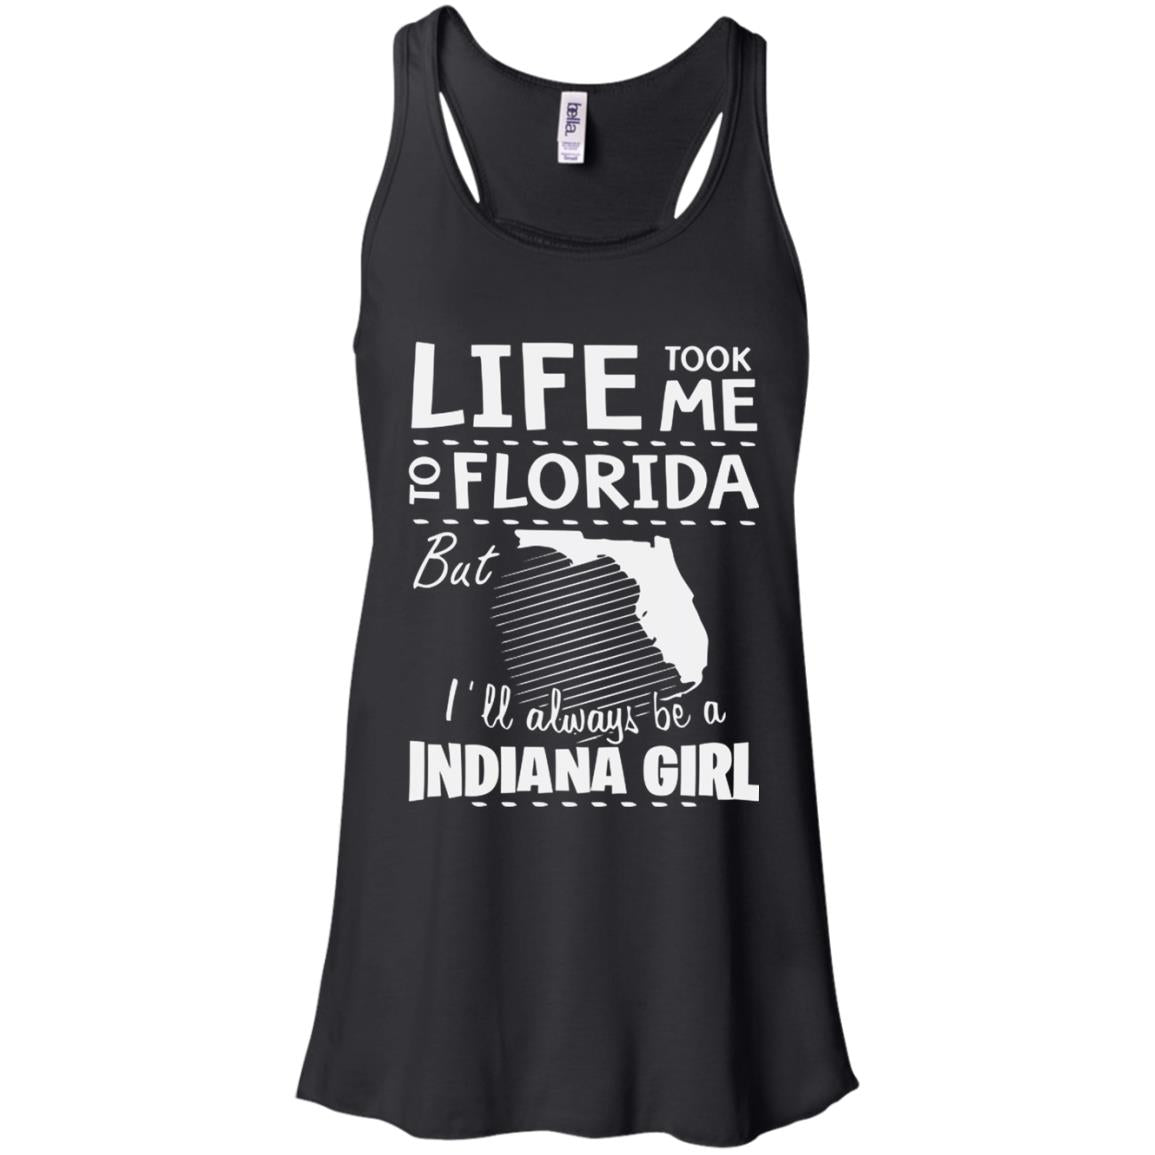 Life Took Me To Florida But I_ll Always Be A Indiana Girl Racerback Tank Shirts